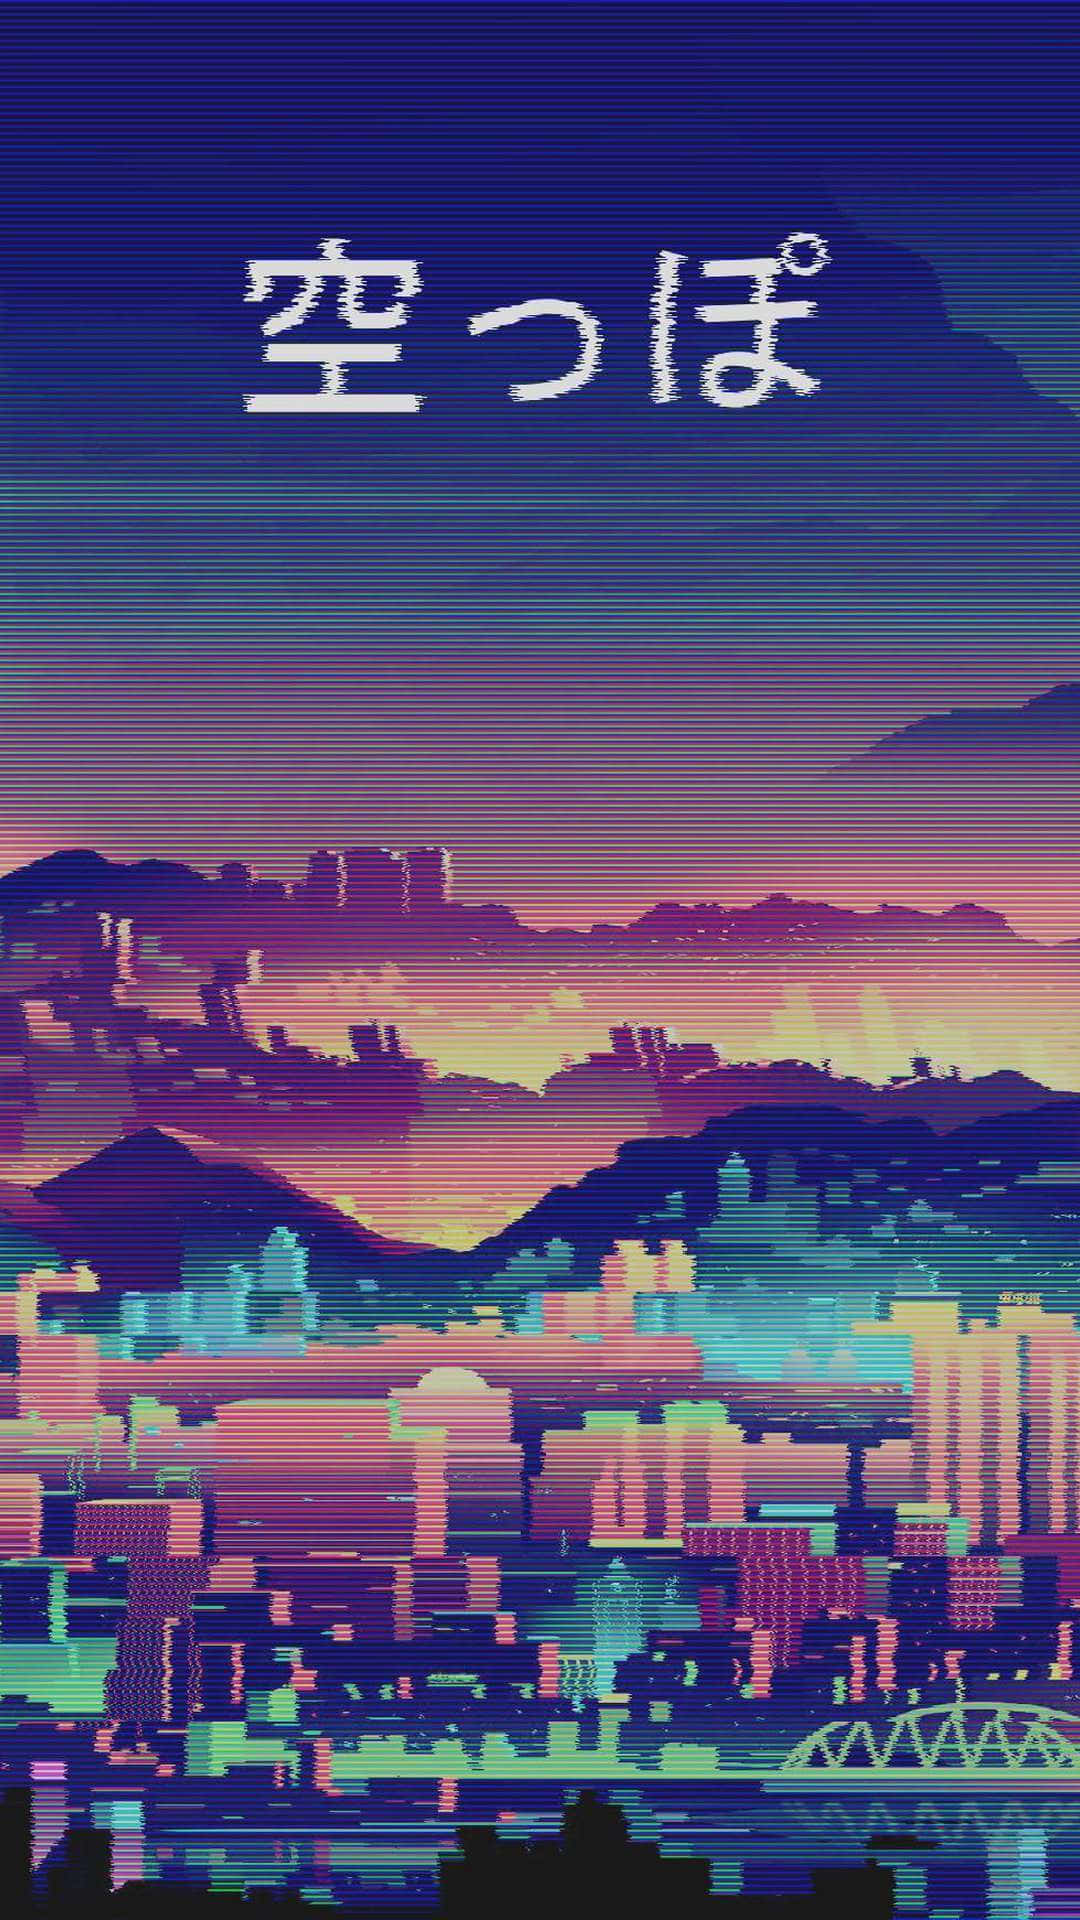 Vintageanime Pixelated Metropolis: Vintage Anime Pixelige Metropole Wallpaper